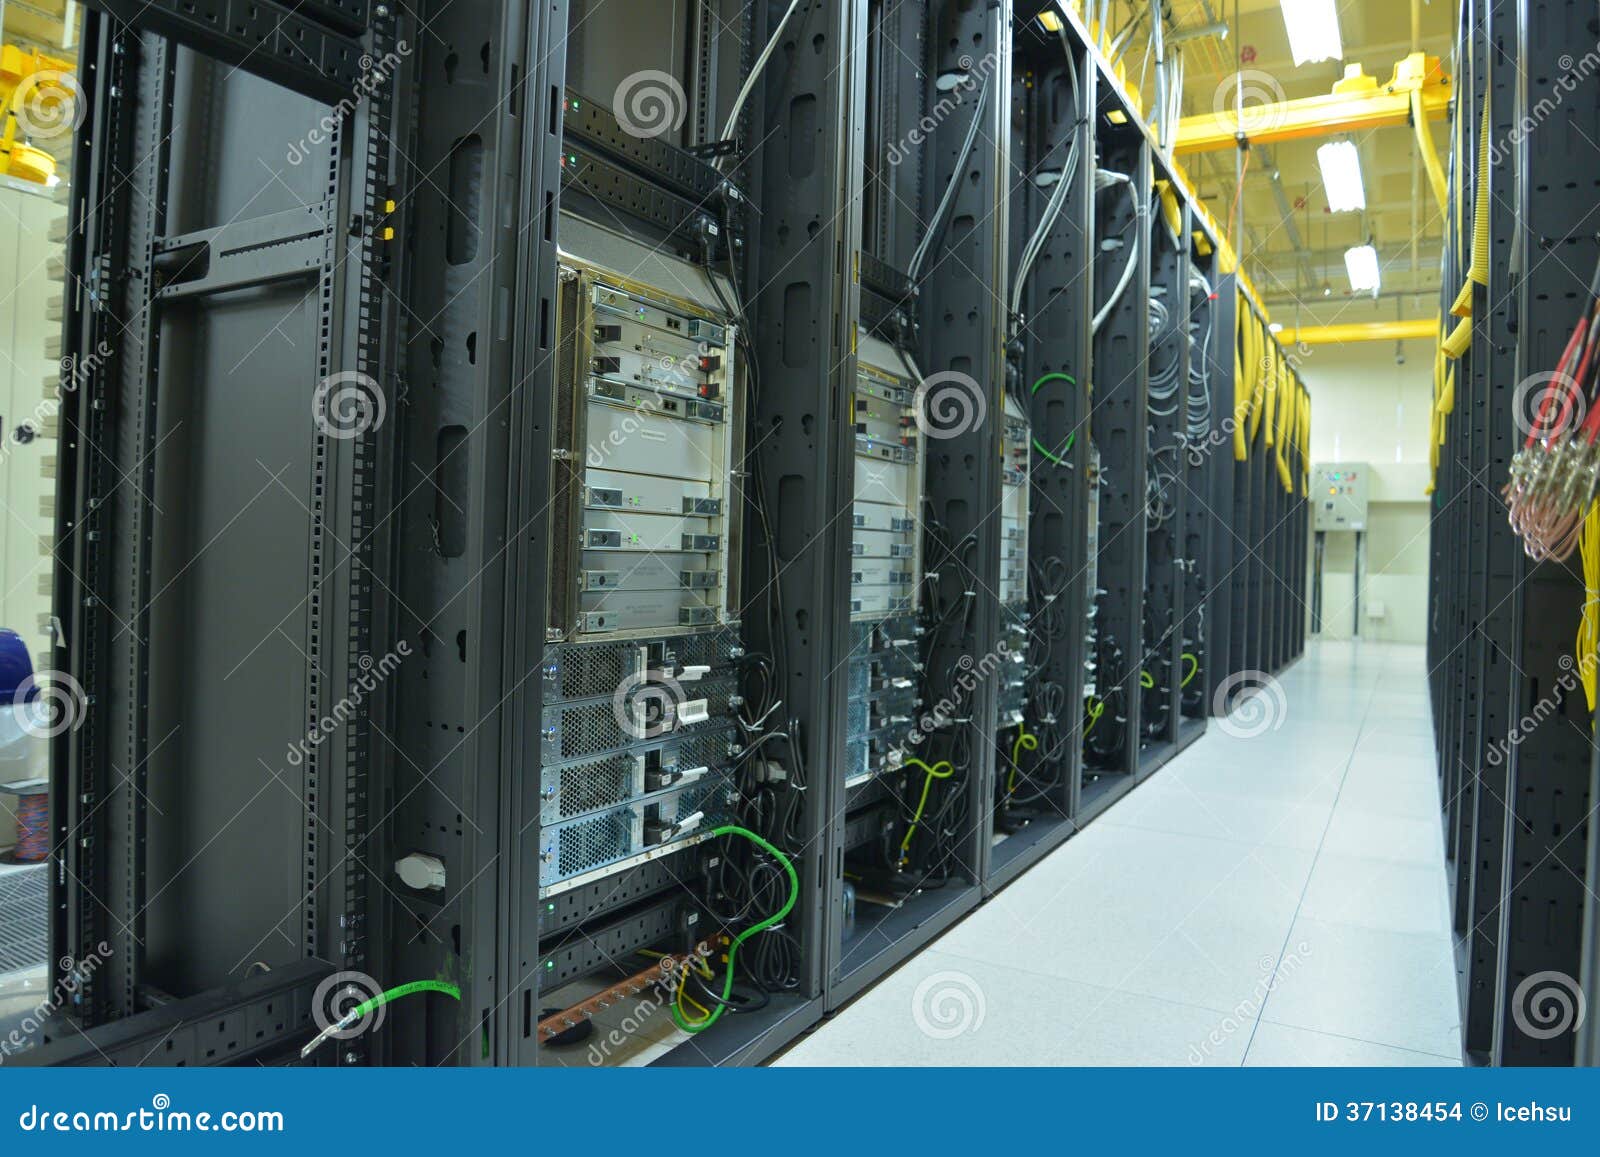 data center rack and stacks